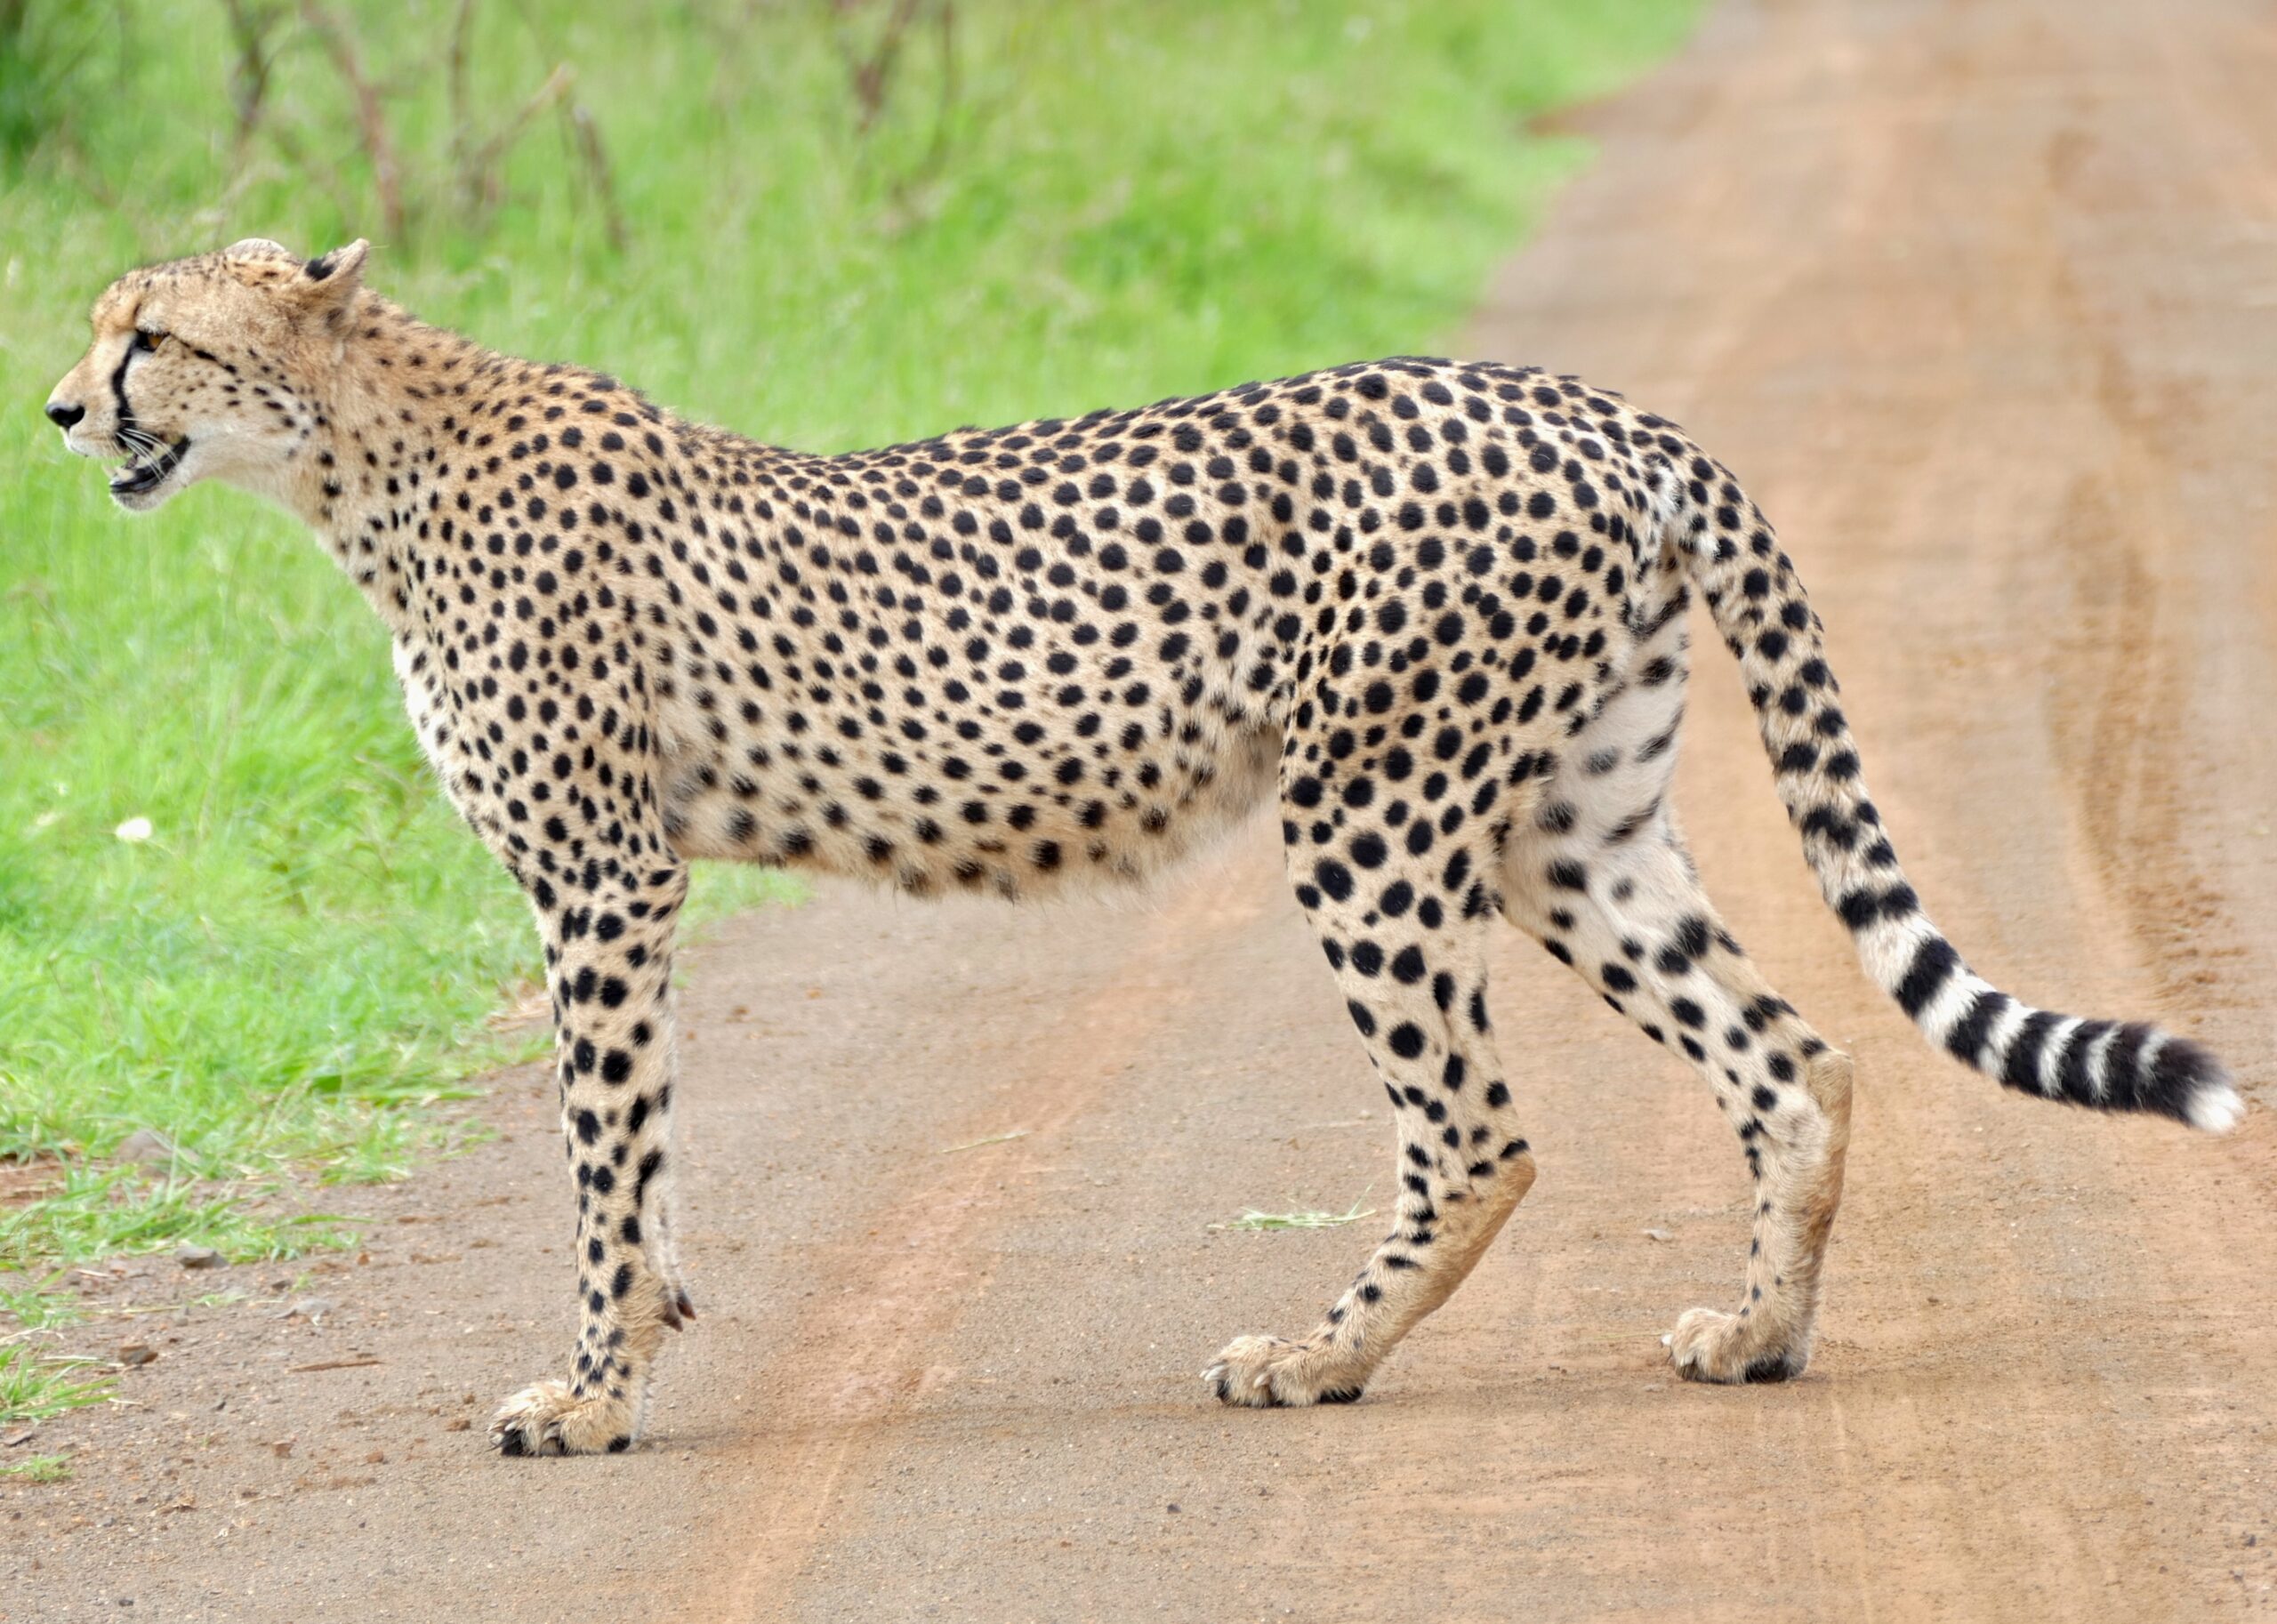 Cheetah_(Acinonyx_jubatus)_on_the_road